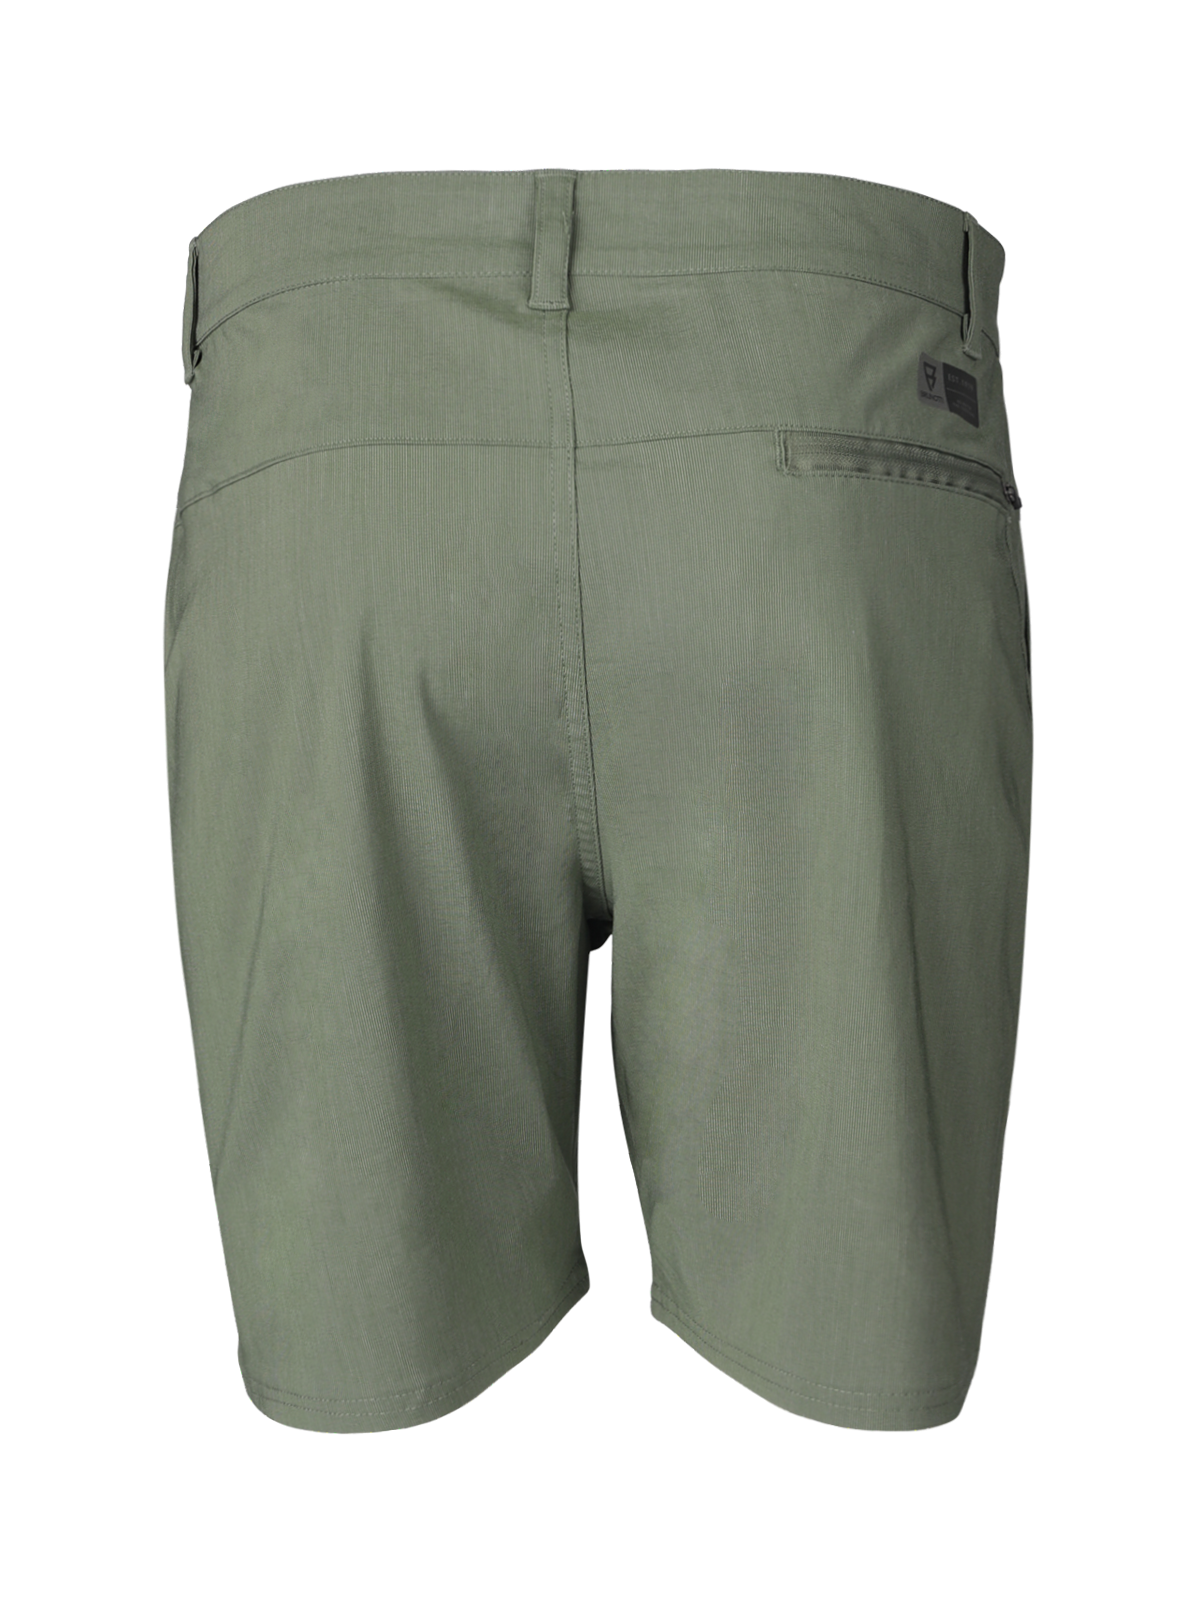 Harret Herren Hybrid Shorts | Grau Grün